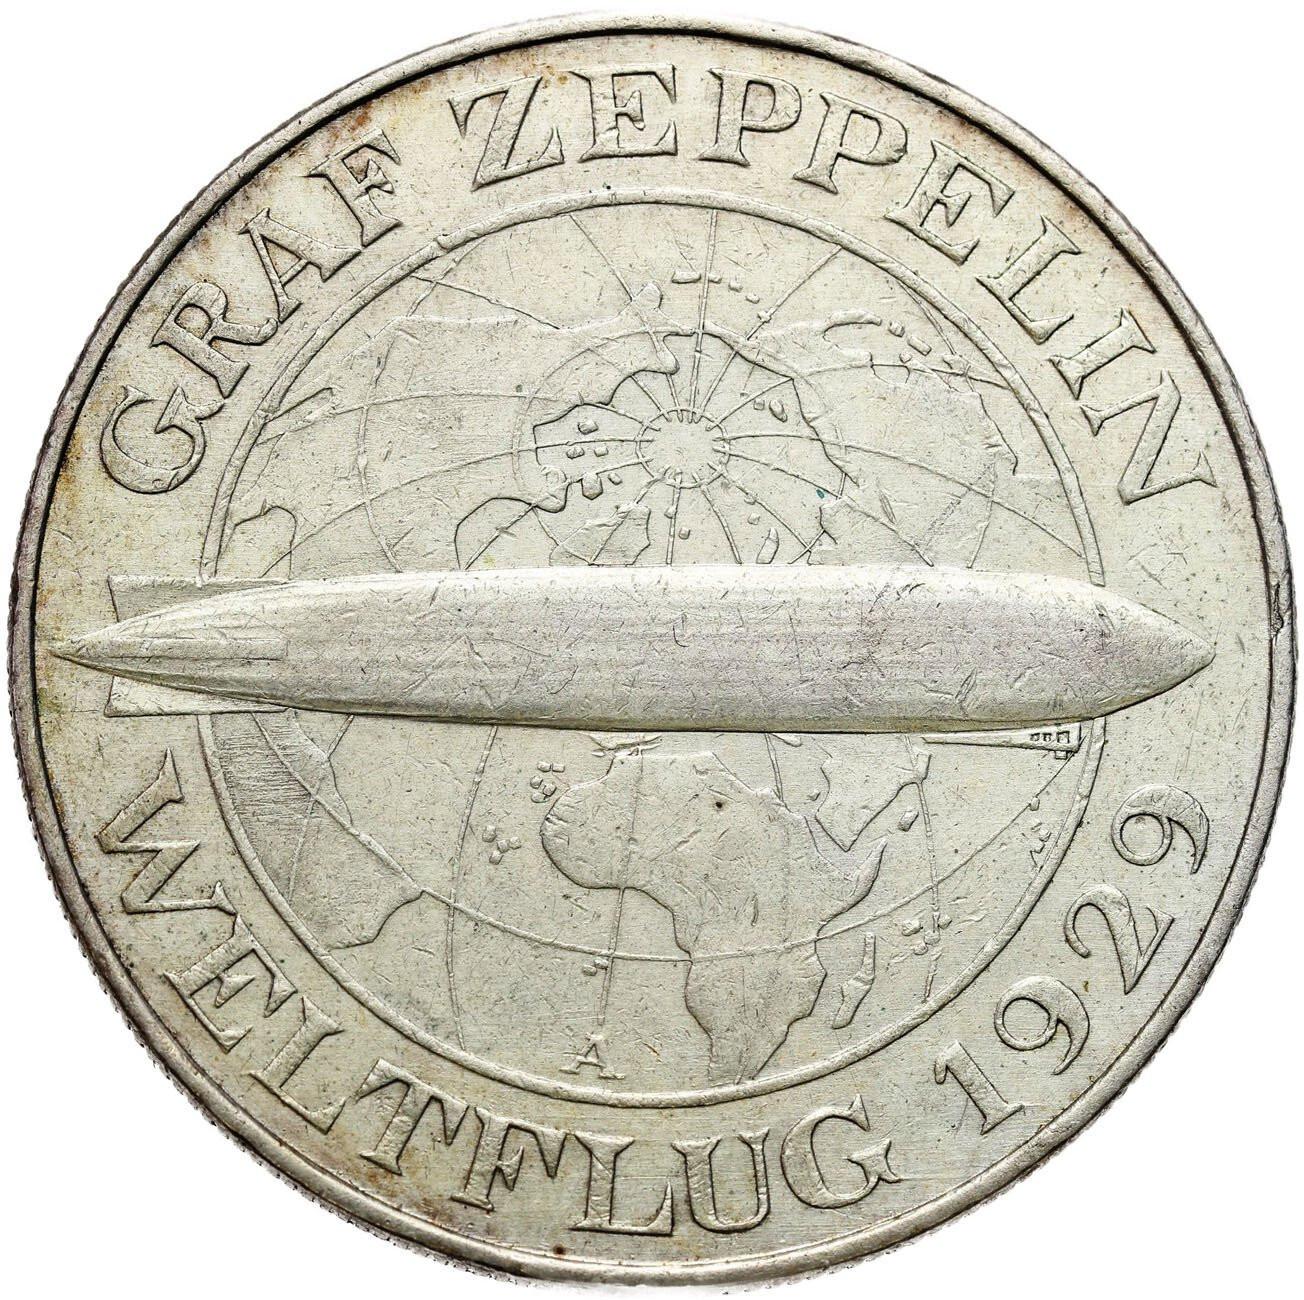 Niemcy, Weimar. 5 Marek 1930 A, Zeppelin - RZADKIE